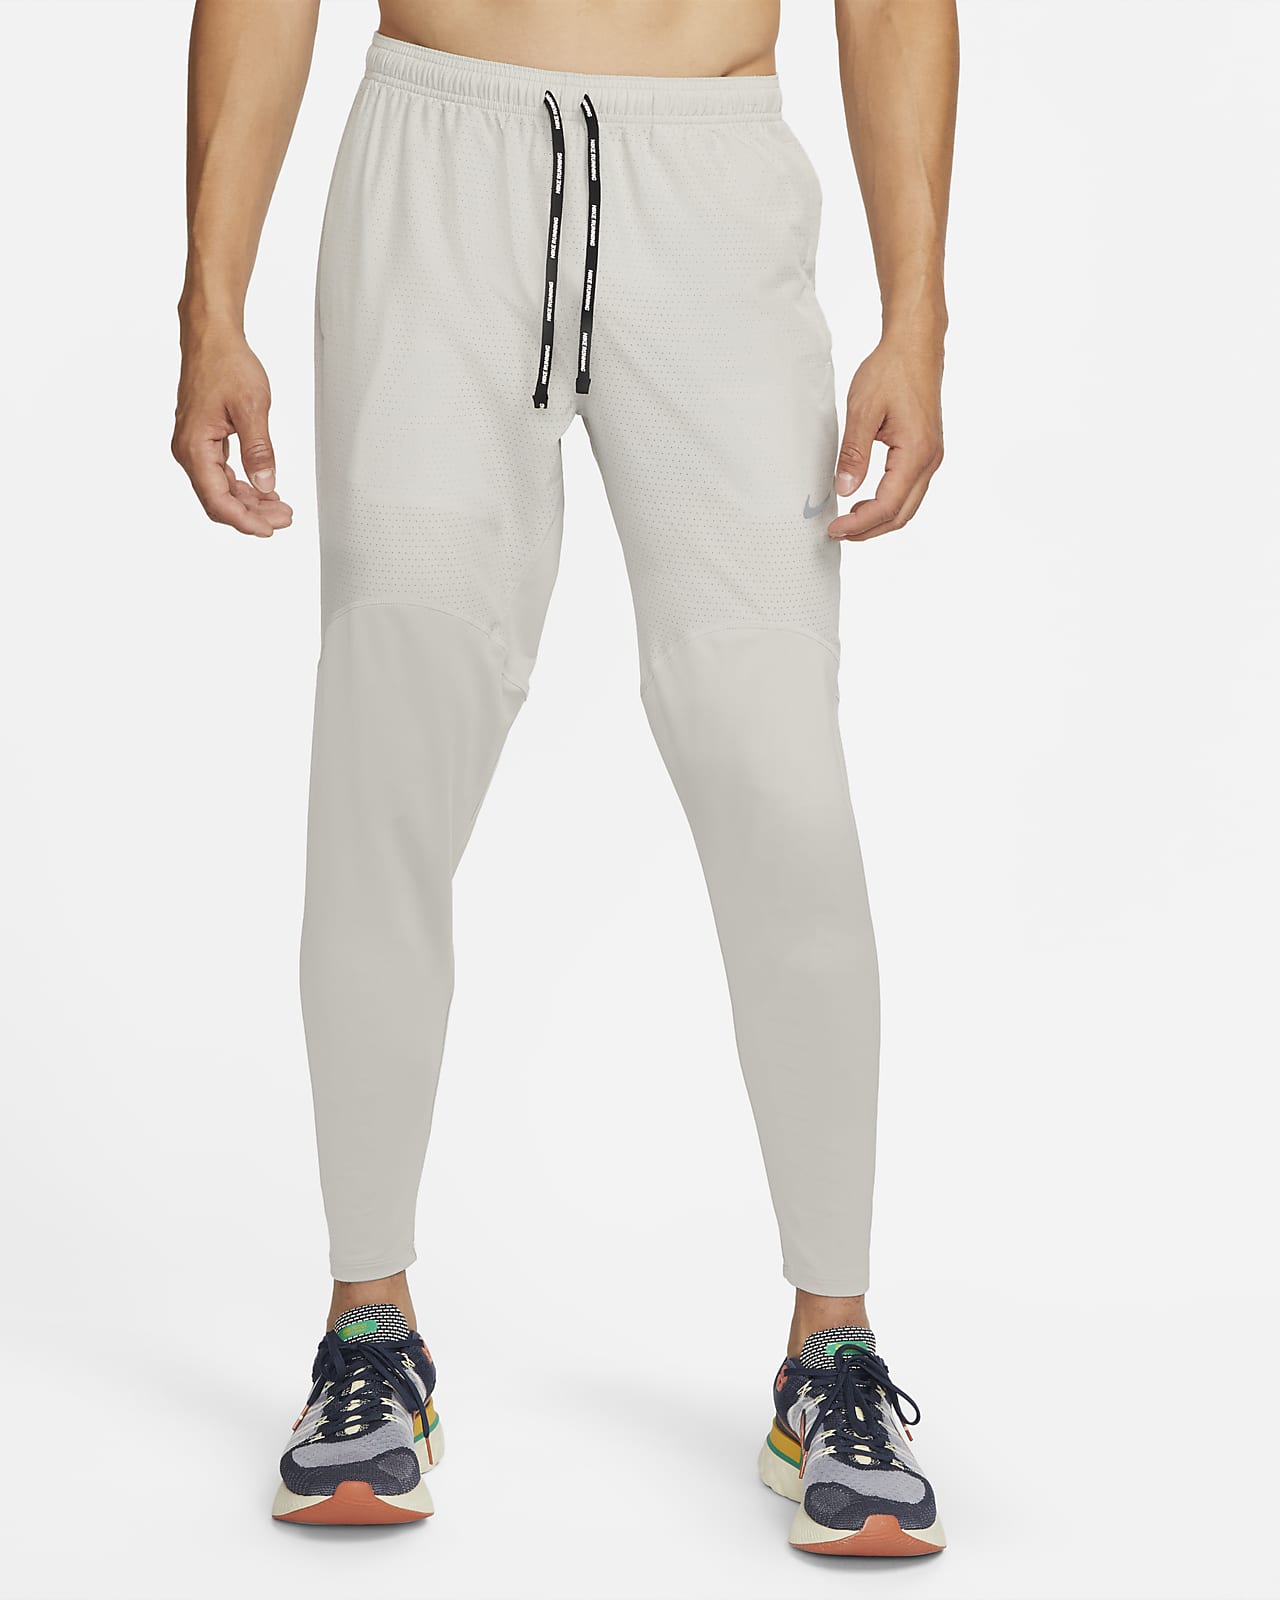 Nike Boys Lightweight Polyester Reflective Training Pants Large